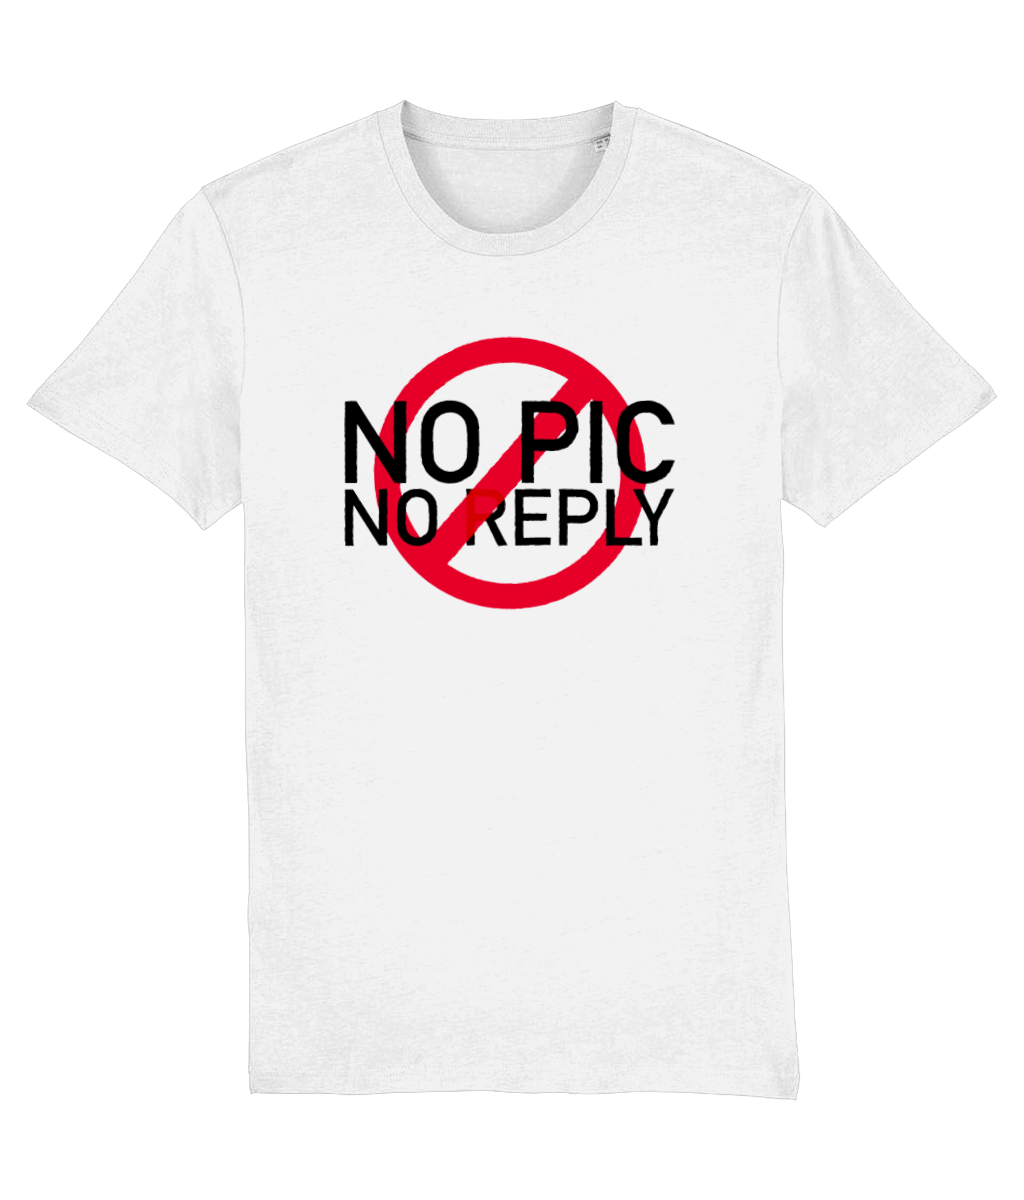 No Pic No Reply Organic Cotton T-Shirt